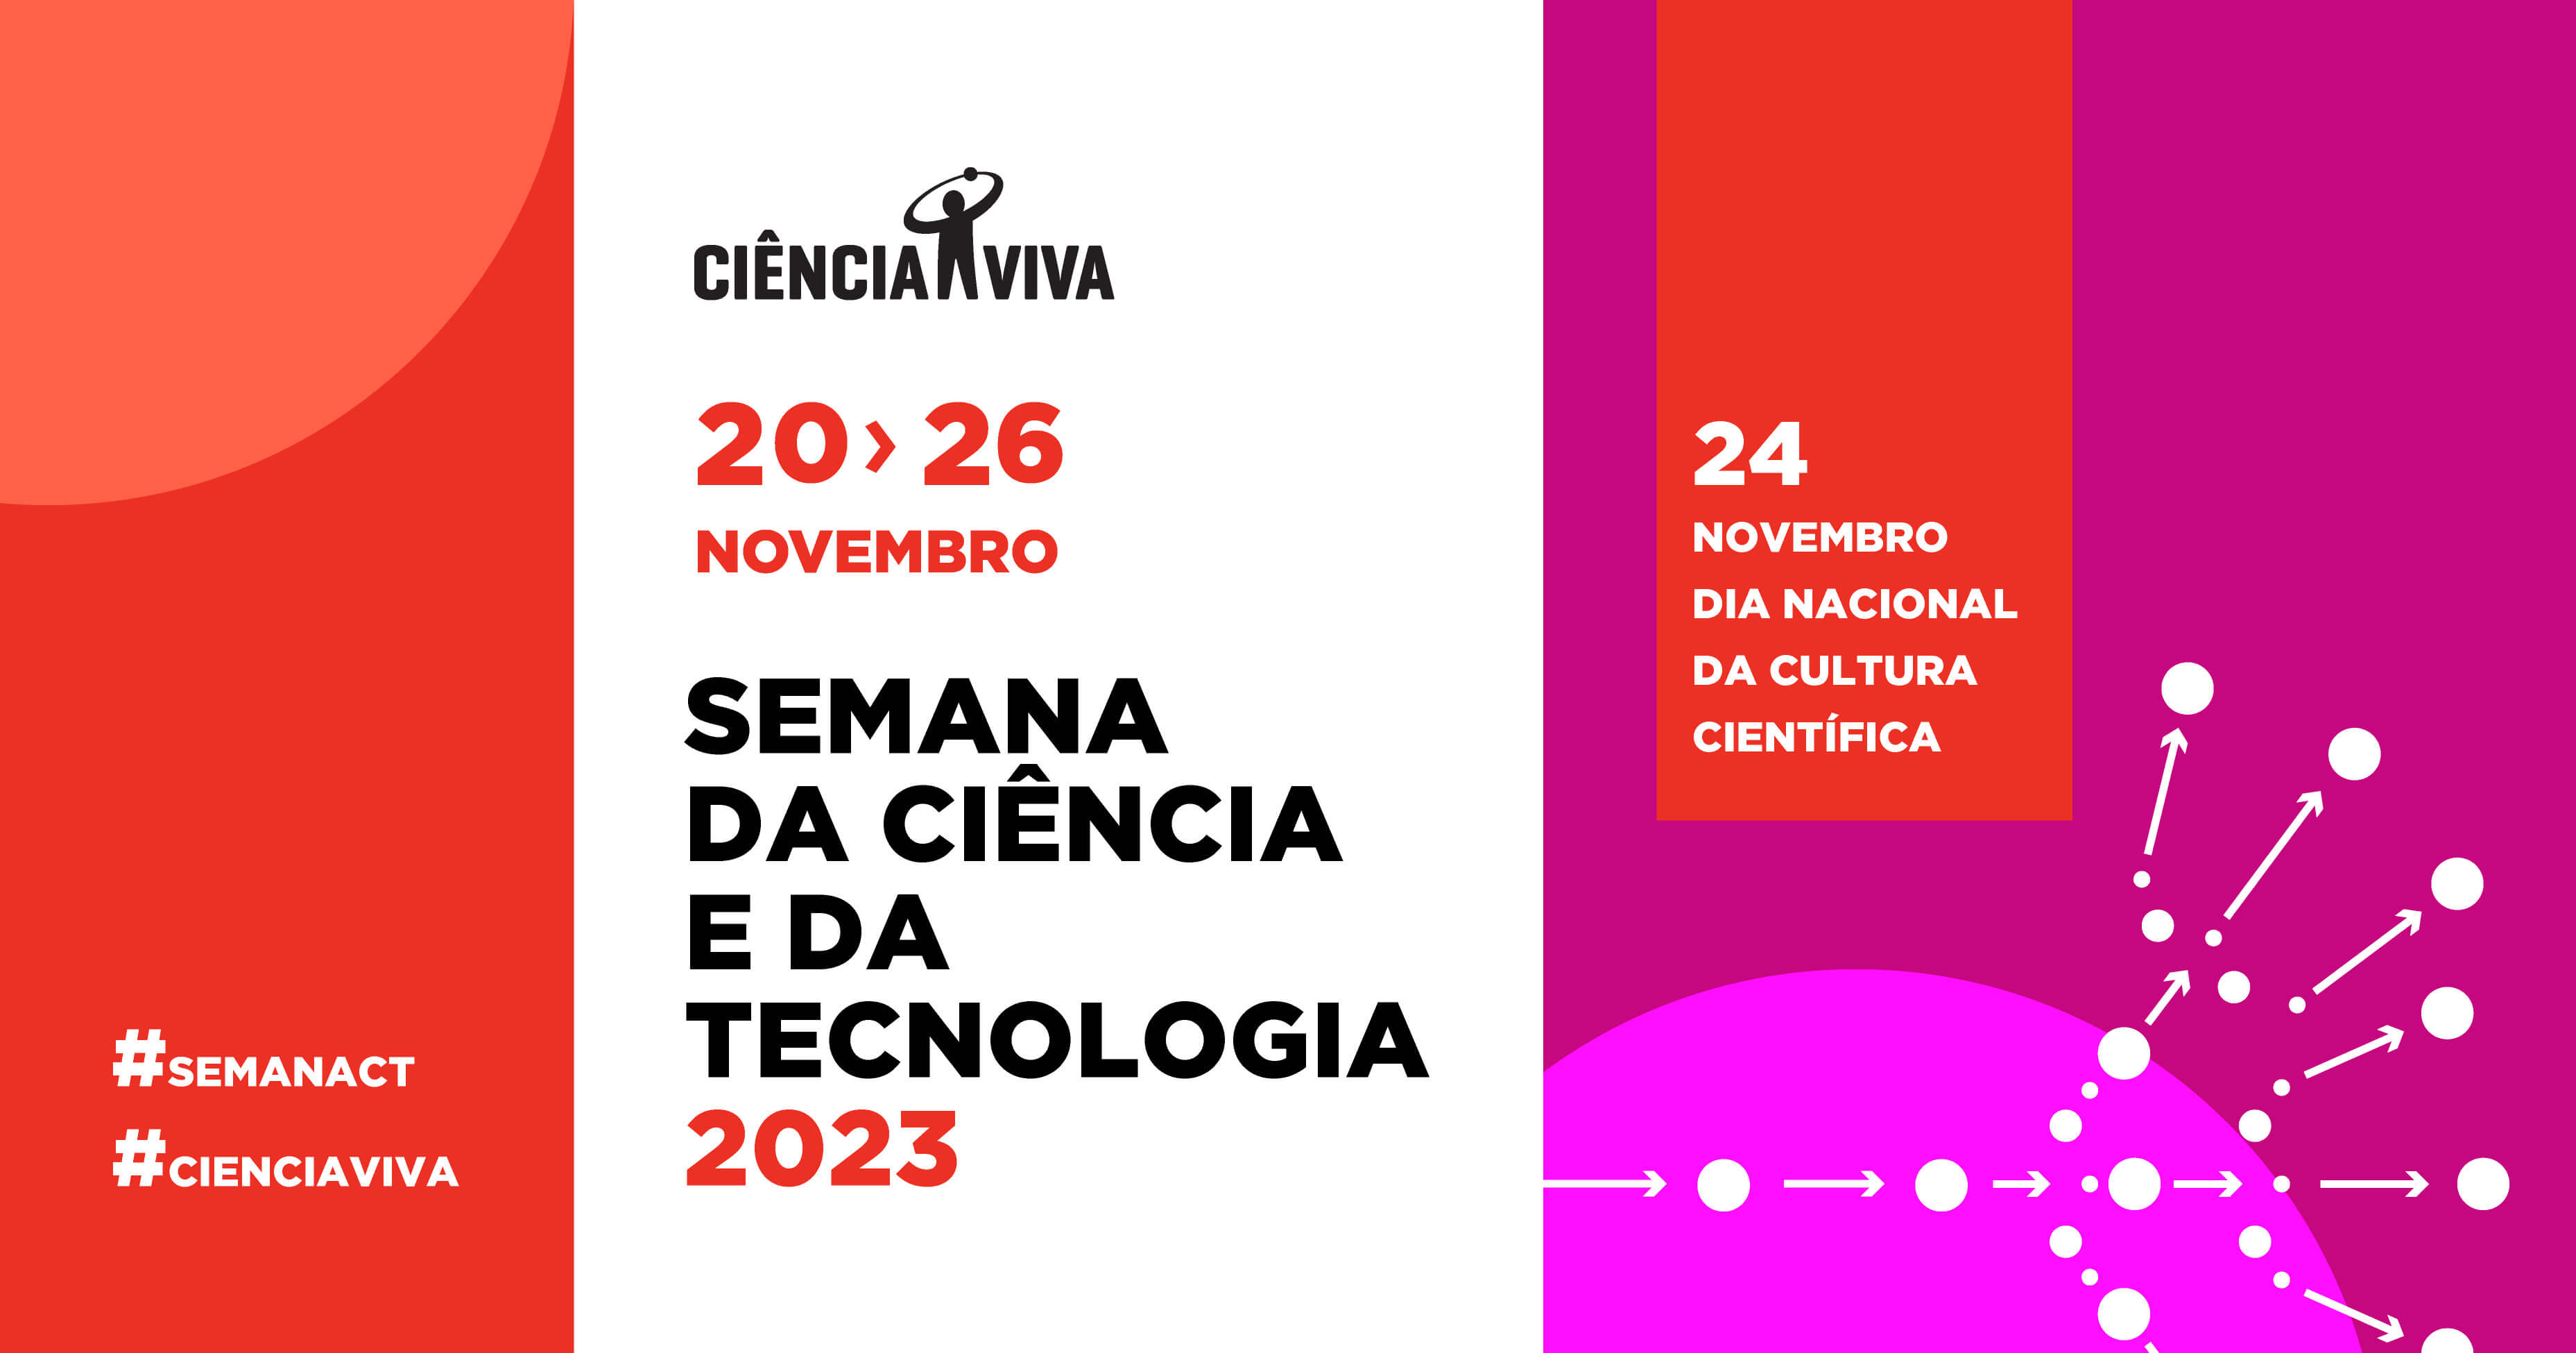 Faixa ilustrativa da Semana da Ciência e Tecnologia 2023, de 20 a 26 de Novembro. A 24 de Novembro celebra-se o Dia Nacional da Cultura Científica.